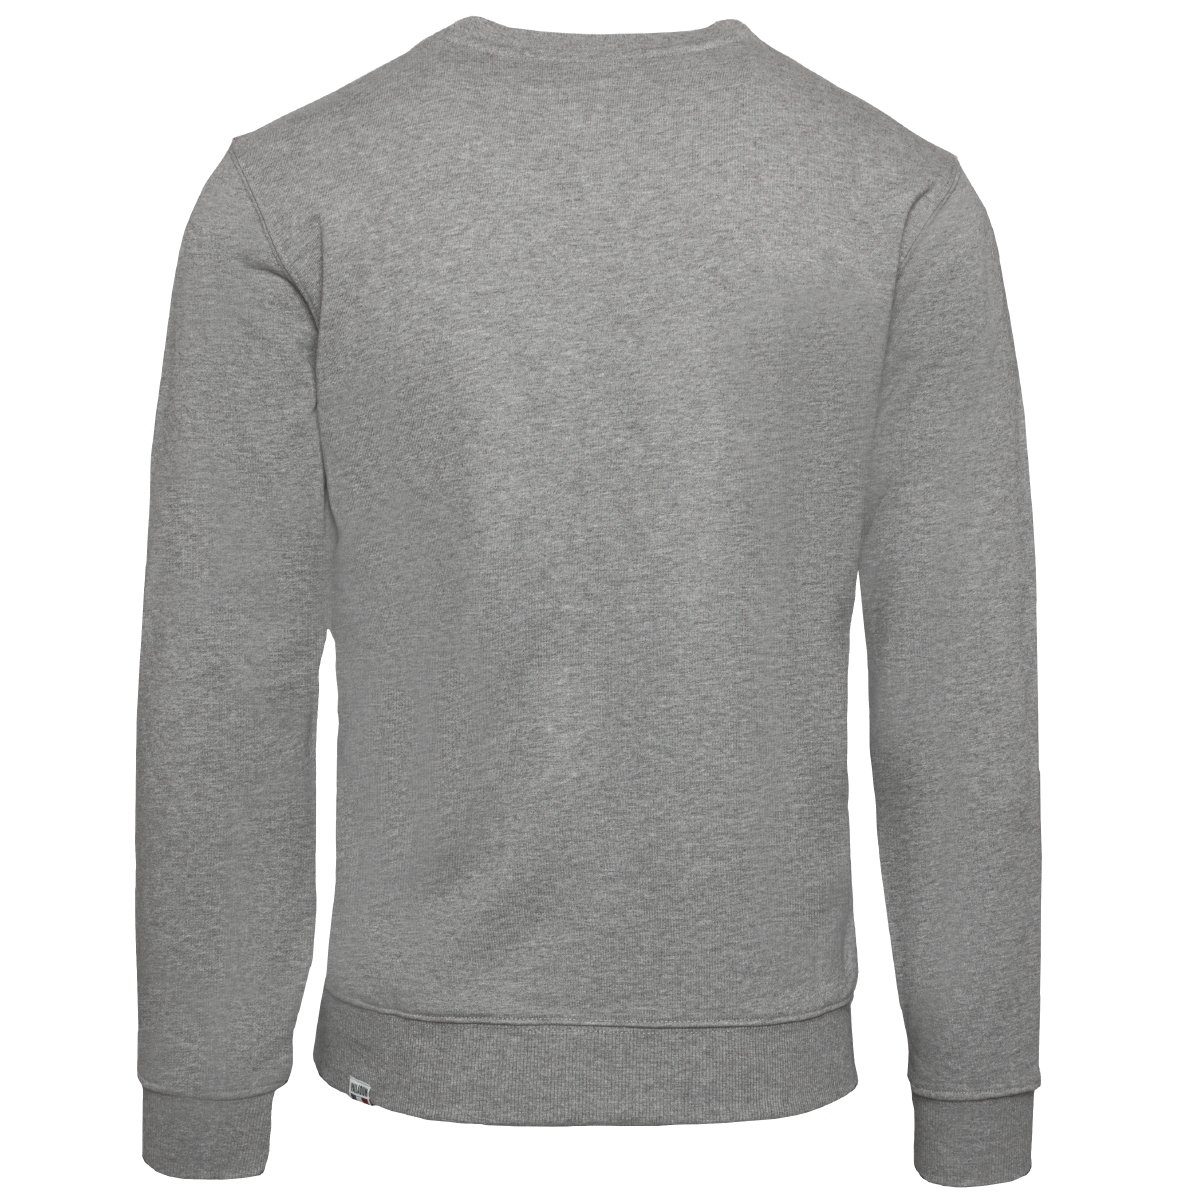 Originale France Sweatshirt grau Herren Palladium